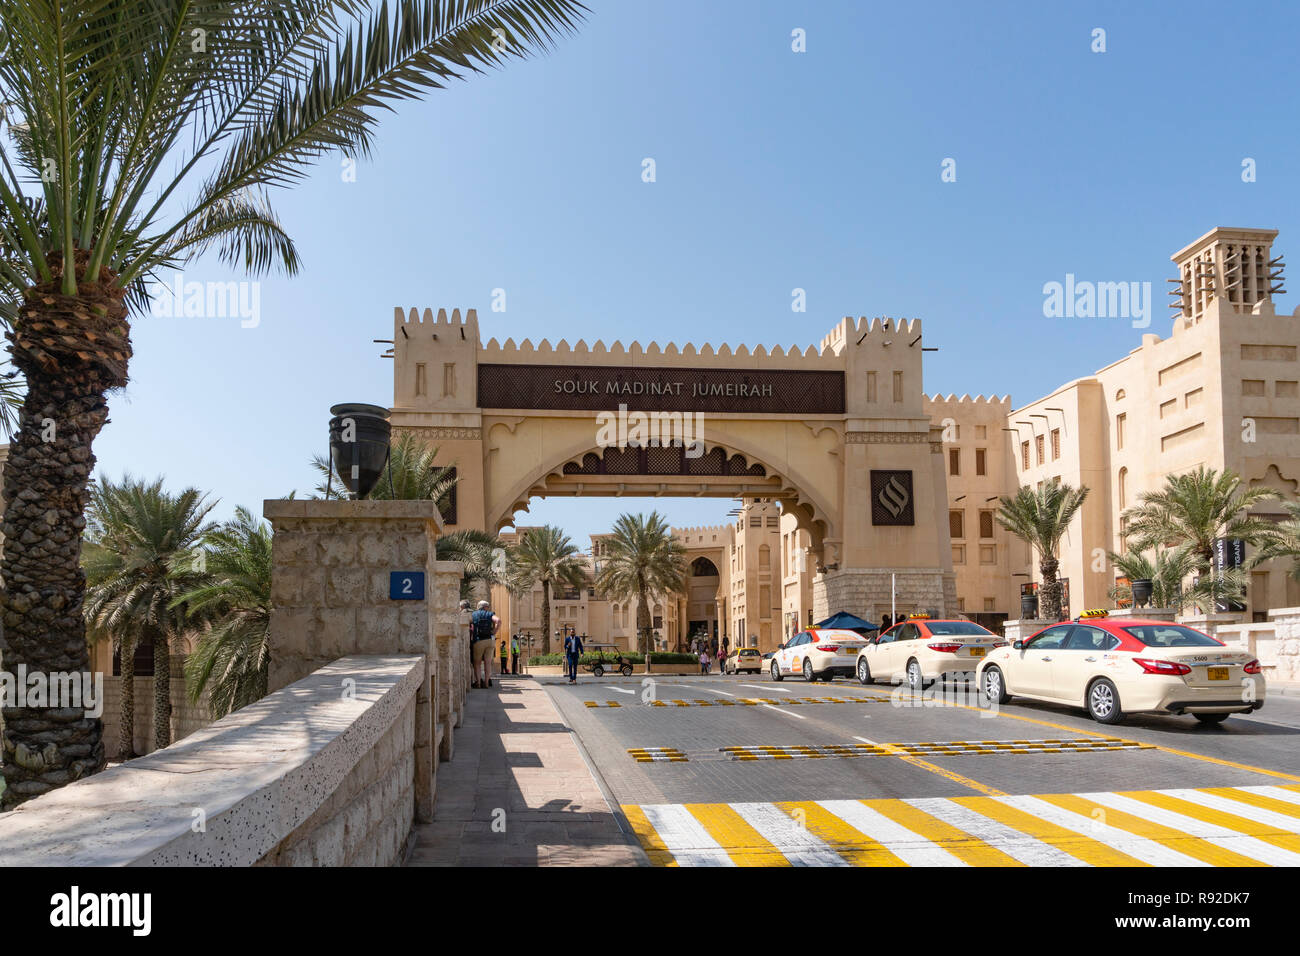 Vista dell'ingresso del Souk Madinat Jumeirah a Dubai, Emirati arabi uniti Foto Stock